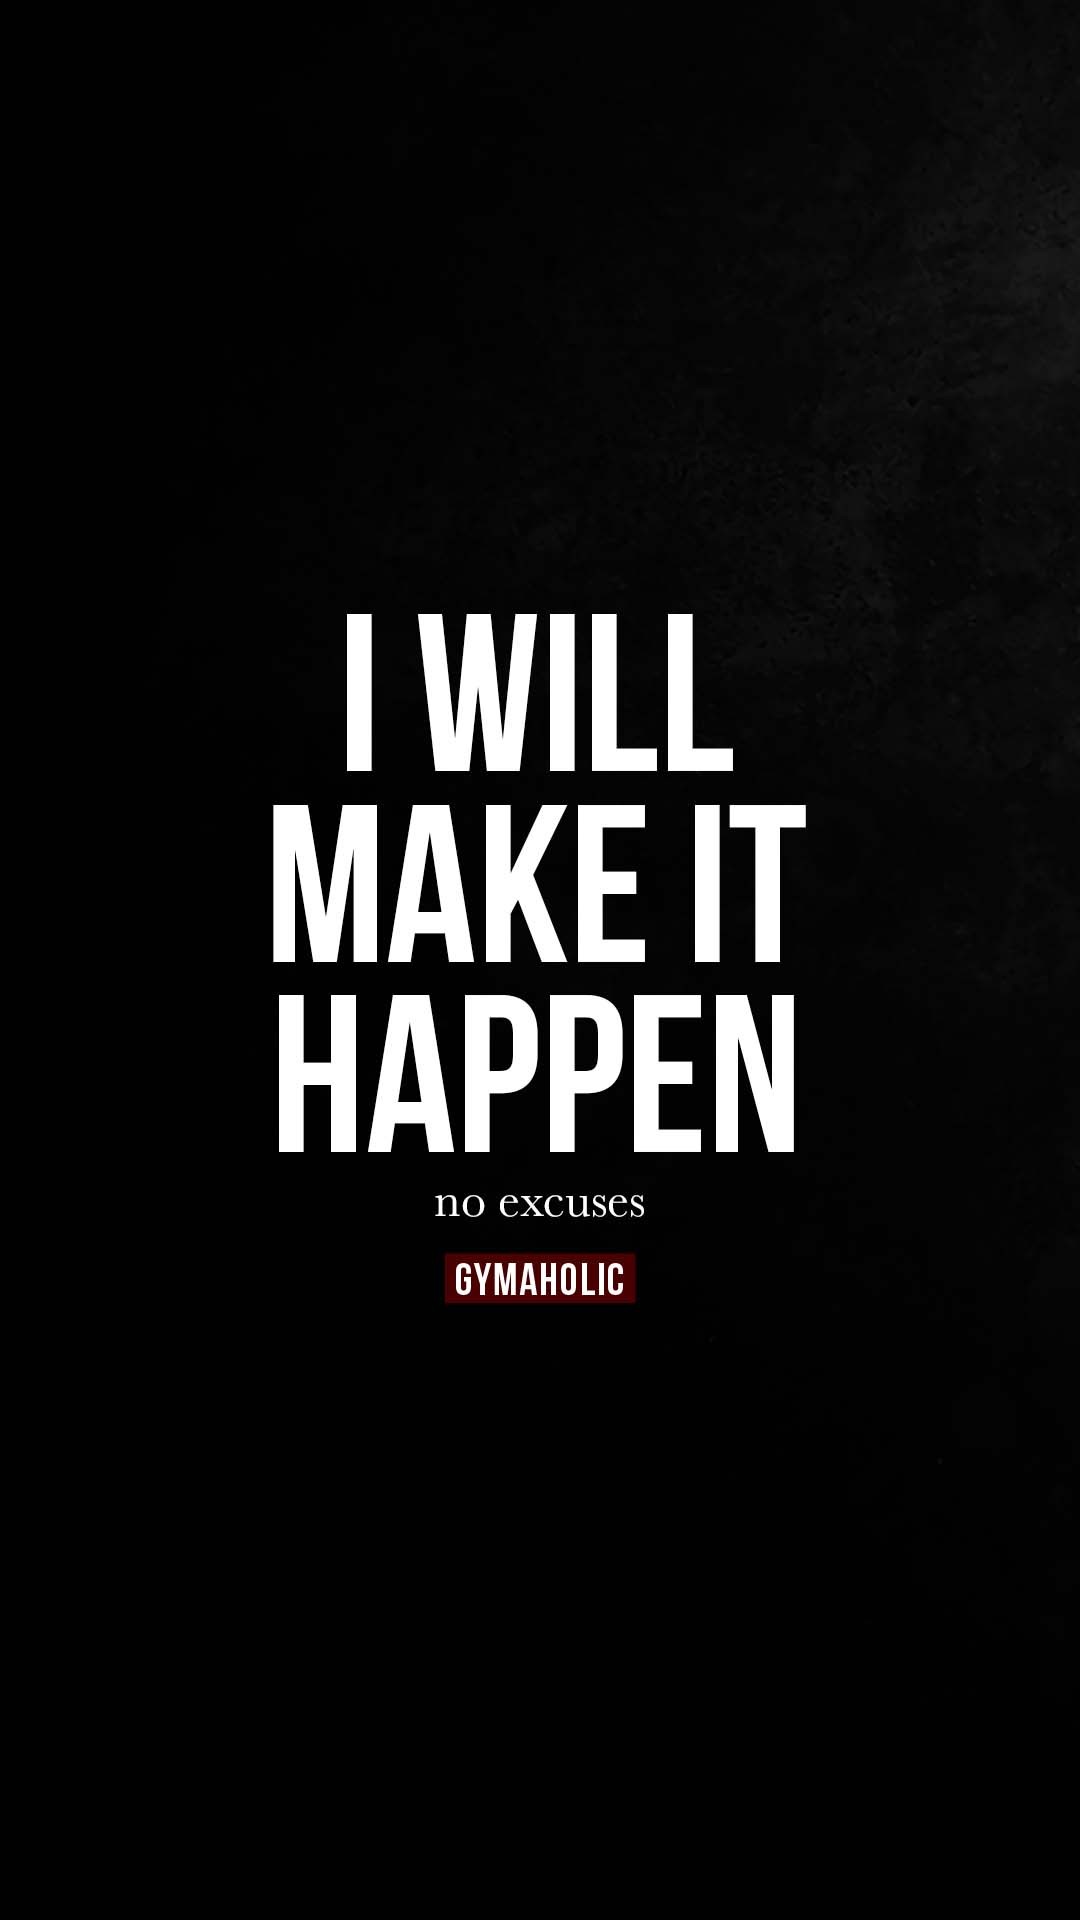 I will make it happen